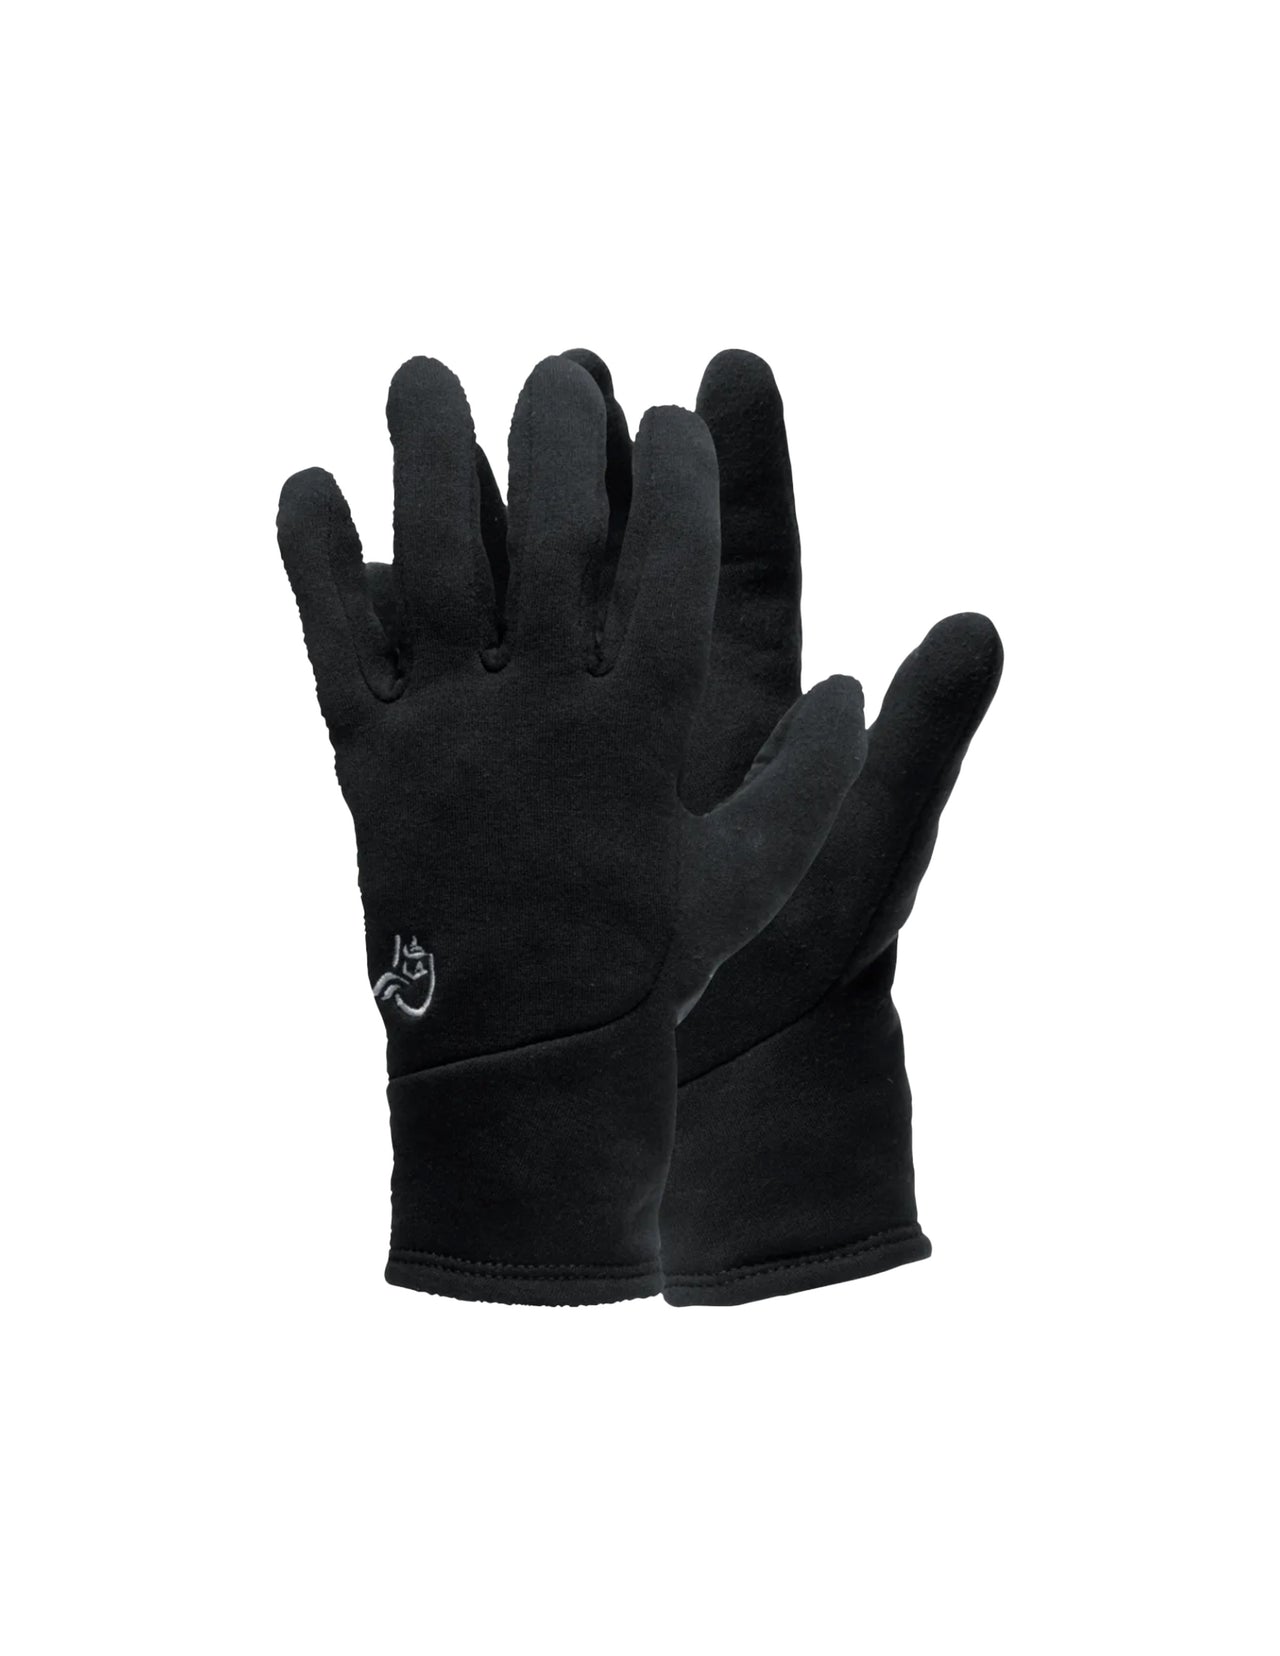 /29 Powerstretch Gloves in Caviar